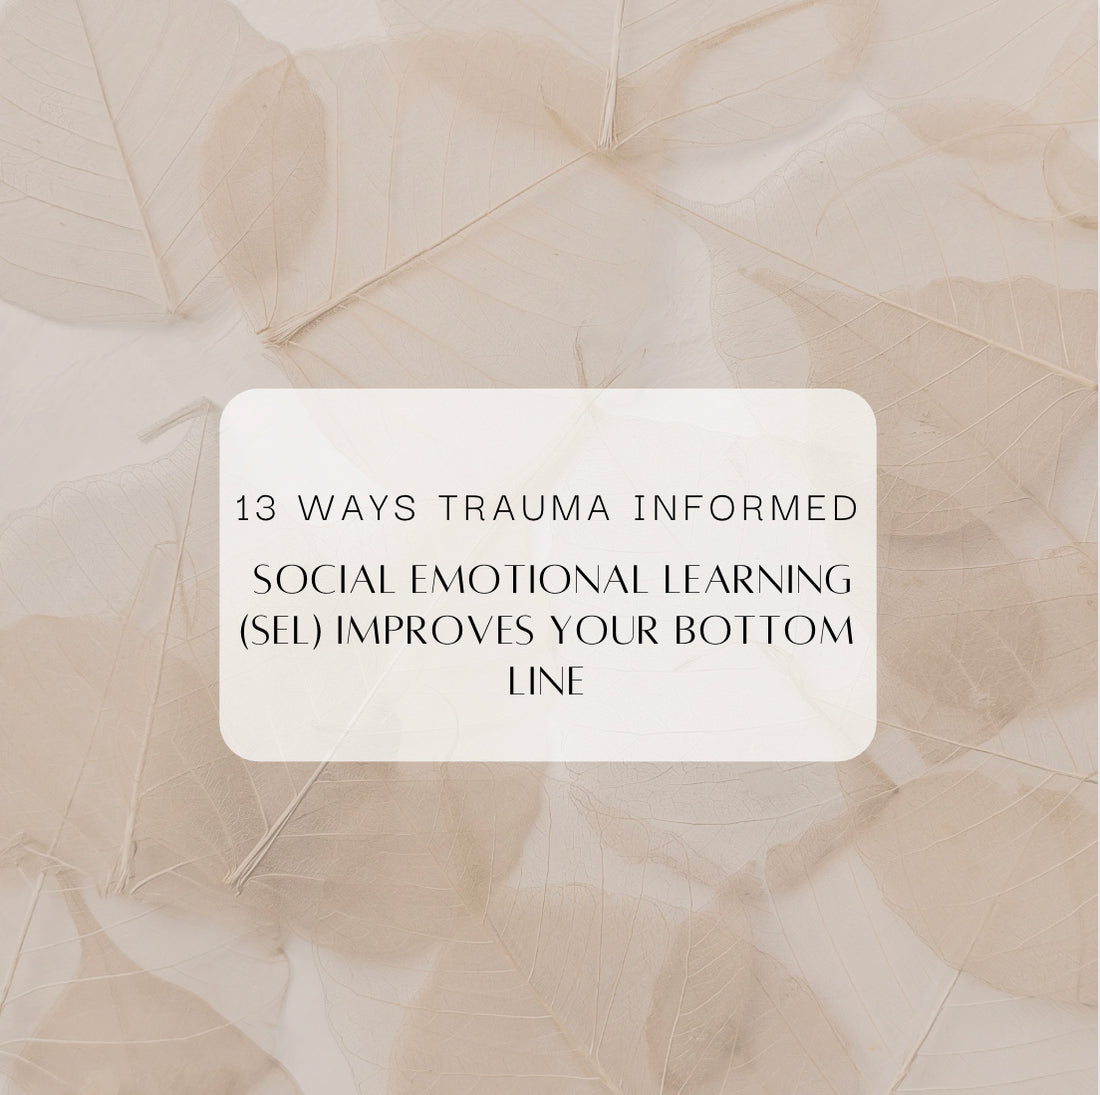 13 Ways Trauma Informed Social Emotional Learning (SEL) Improves Your Bottom Line